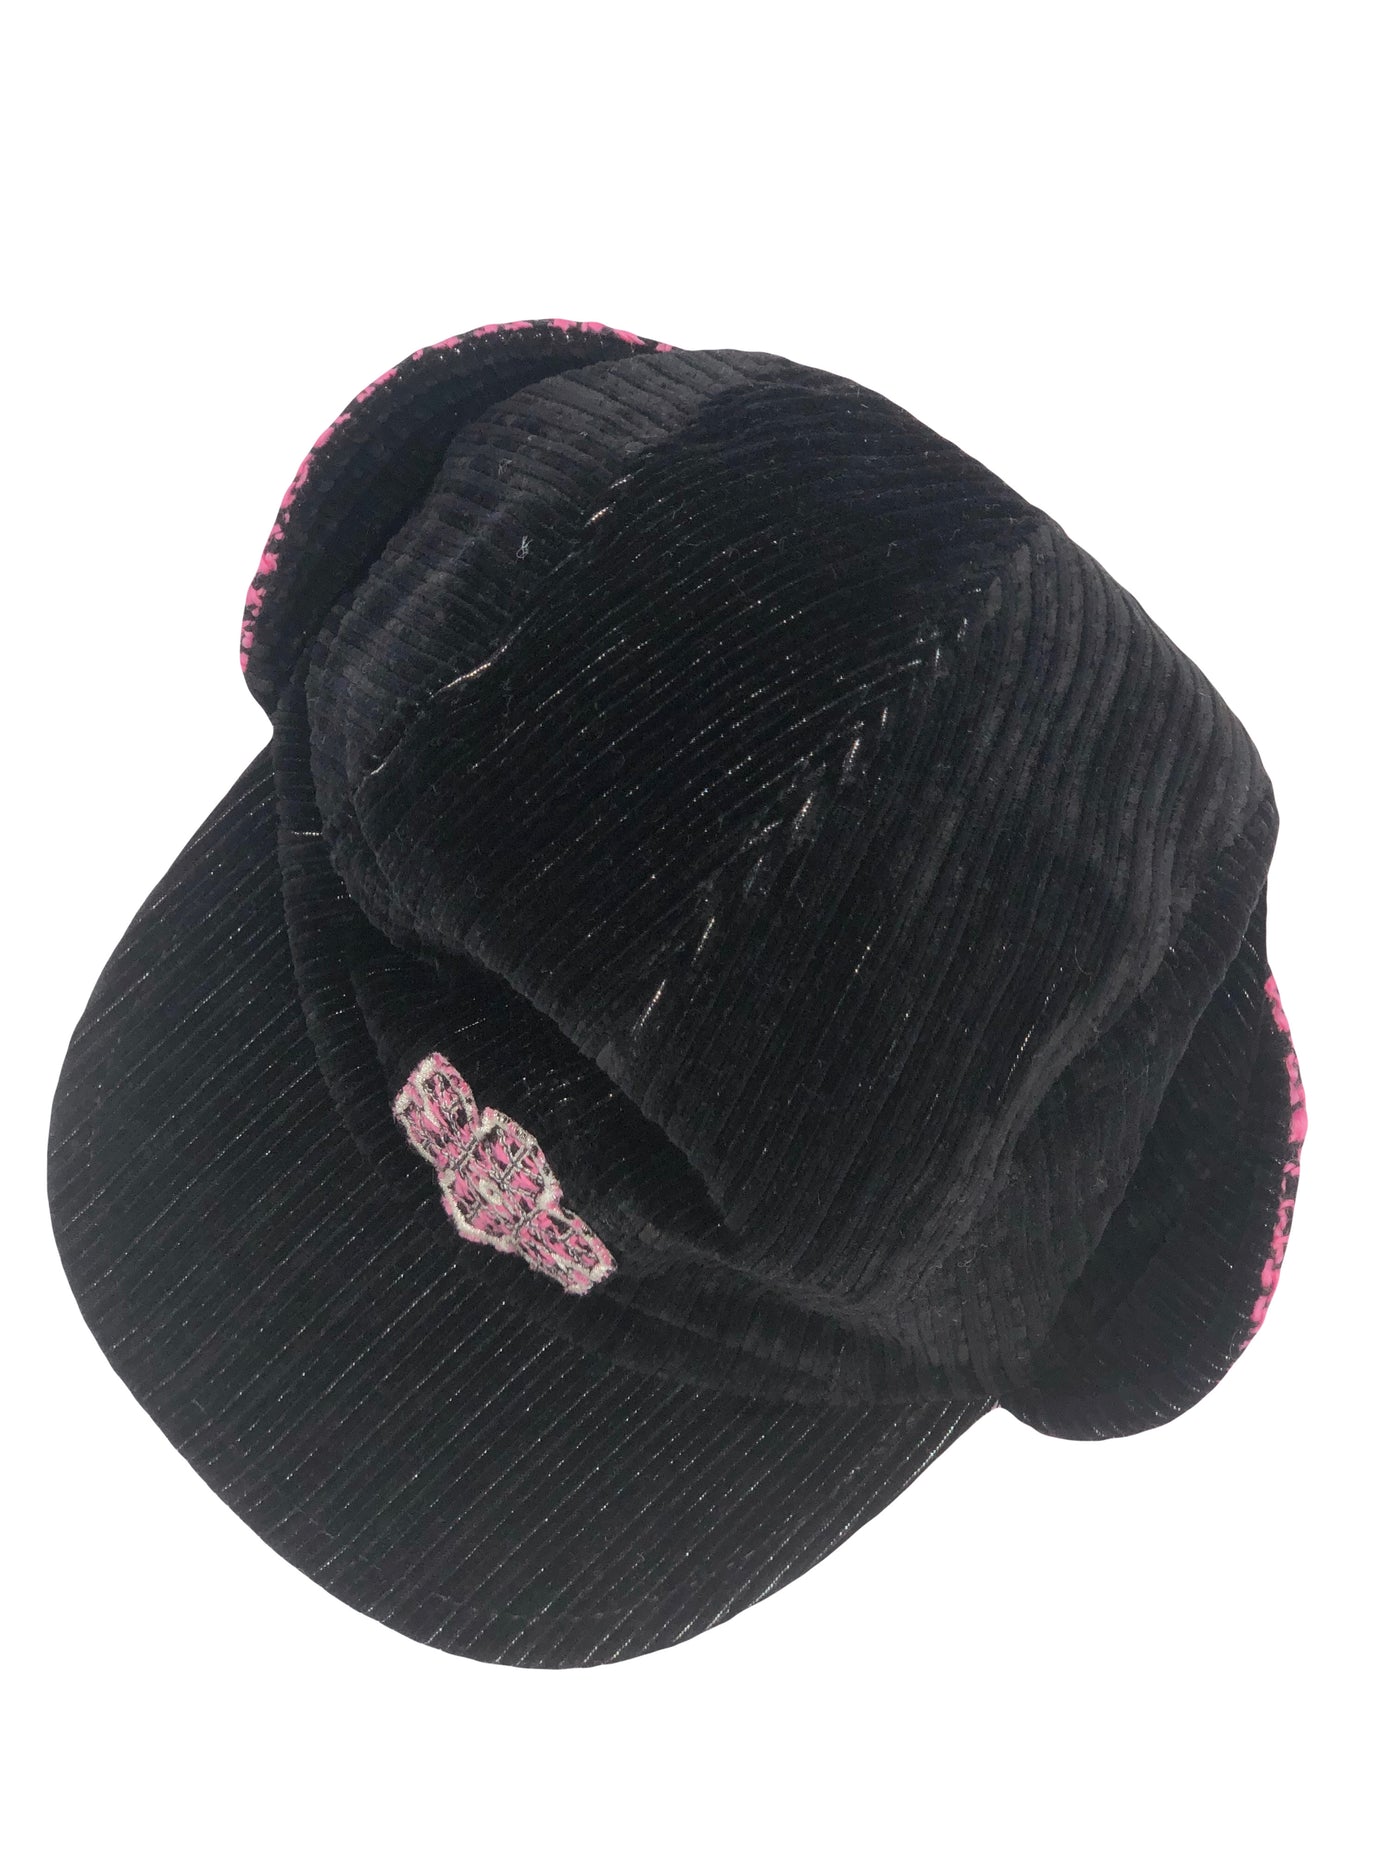 CHANEL Coco Neige 2019/20 corduroy tweed hat size L